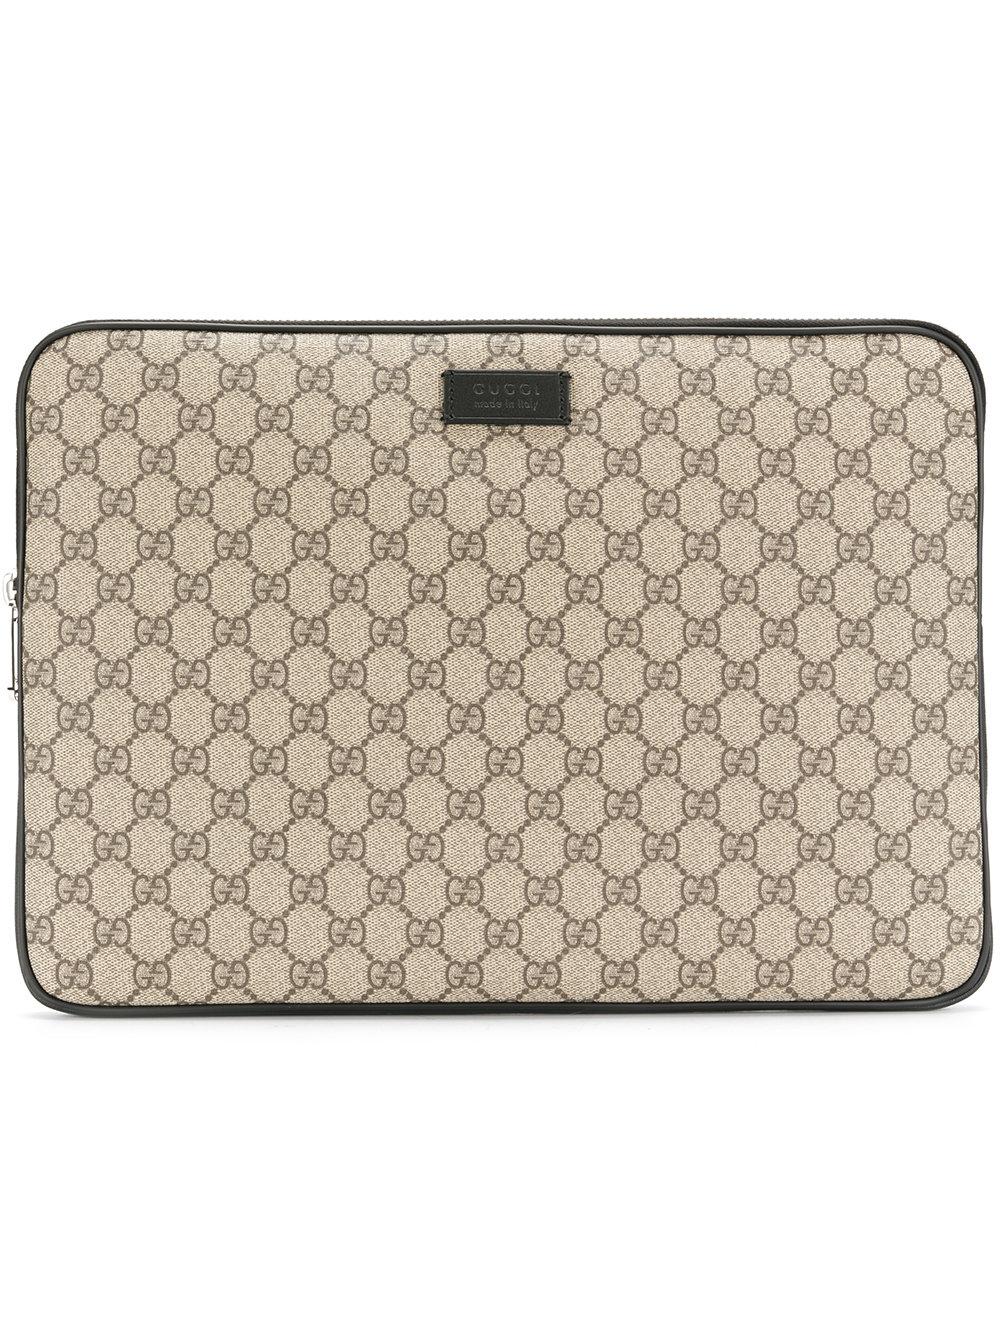 Gucci Laptop Cases for Women - Poshmark